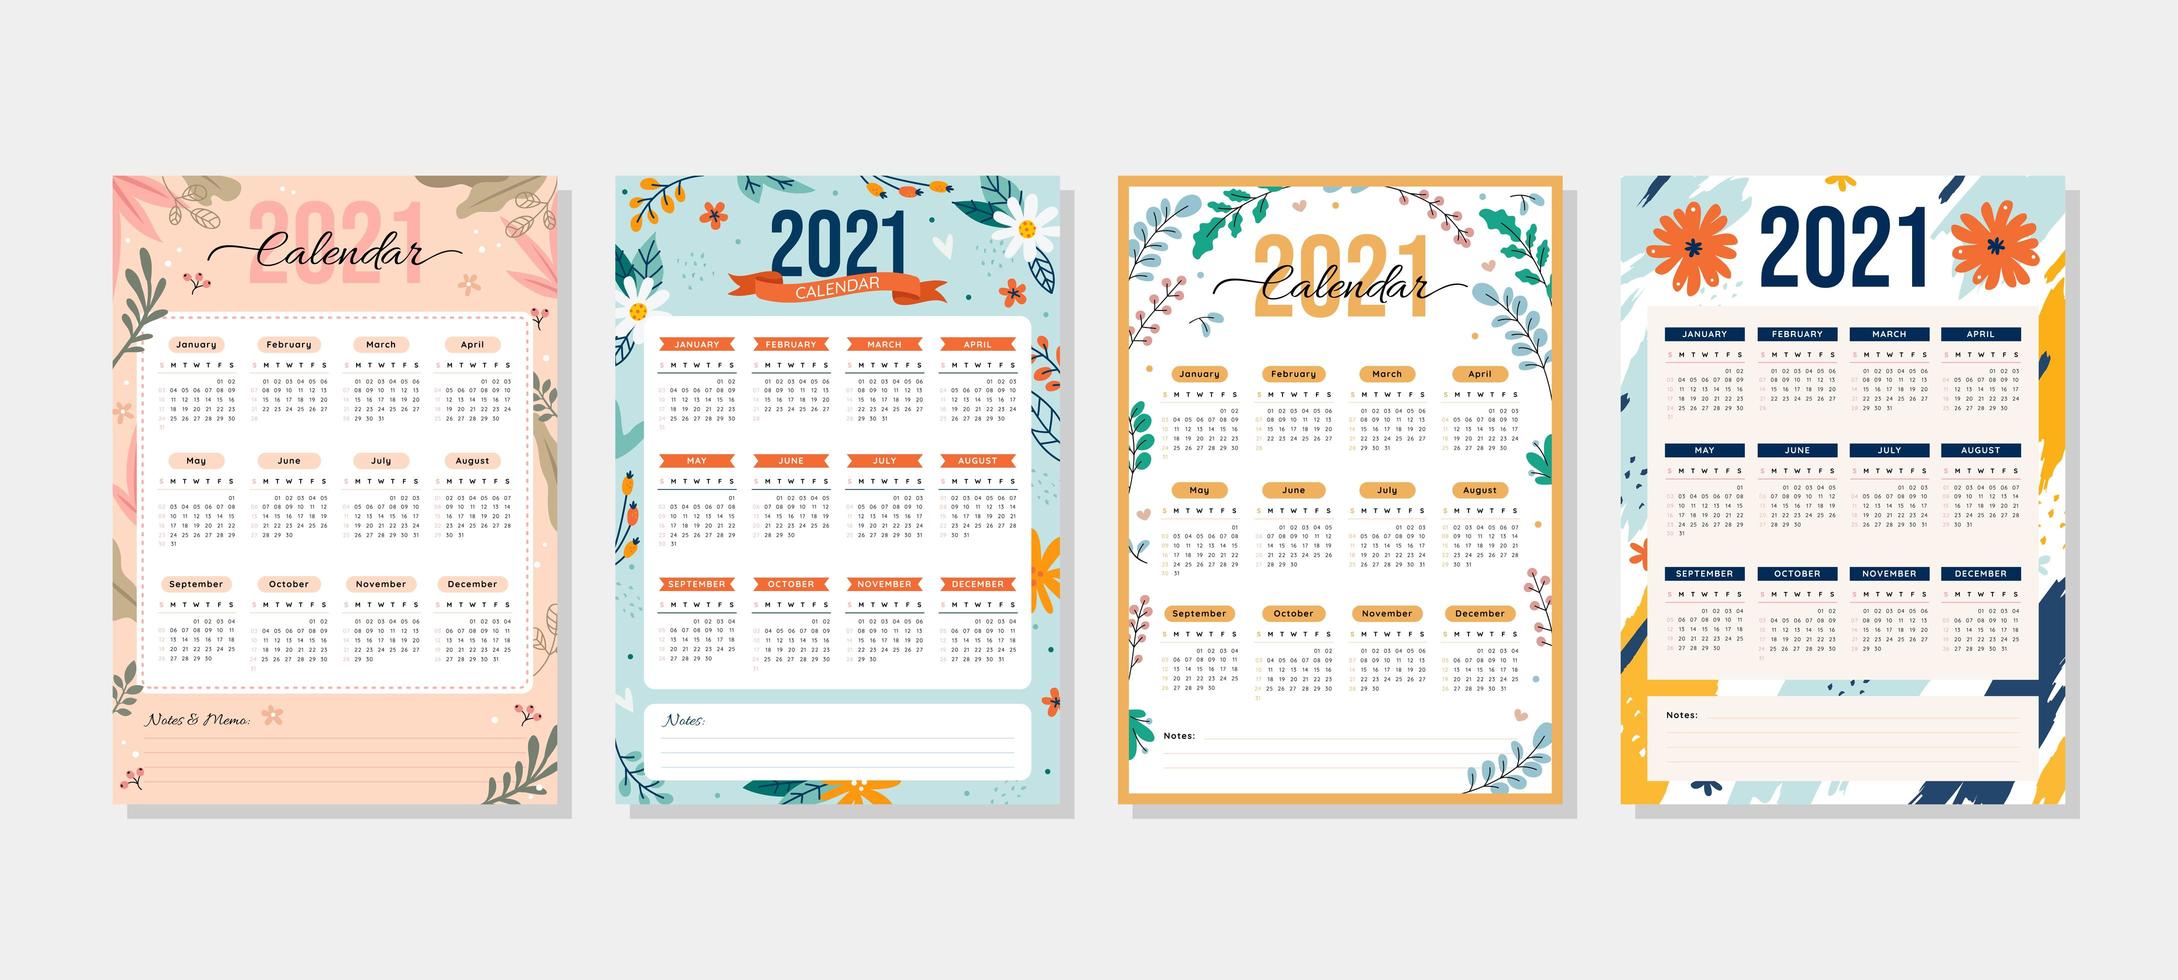 2021 Calendar with Floral Theme vector